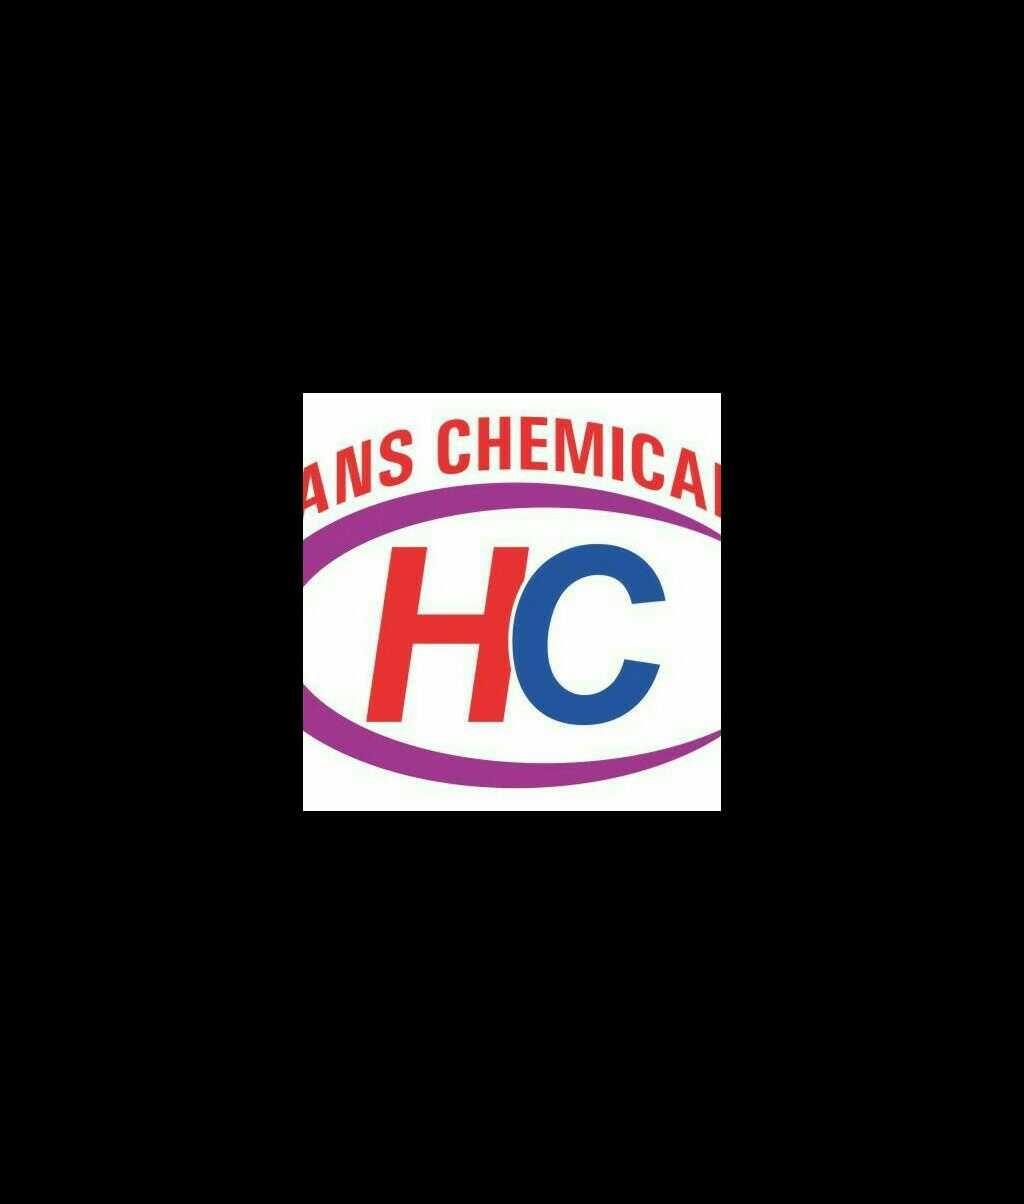 Hans Chemicals